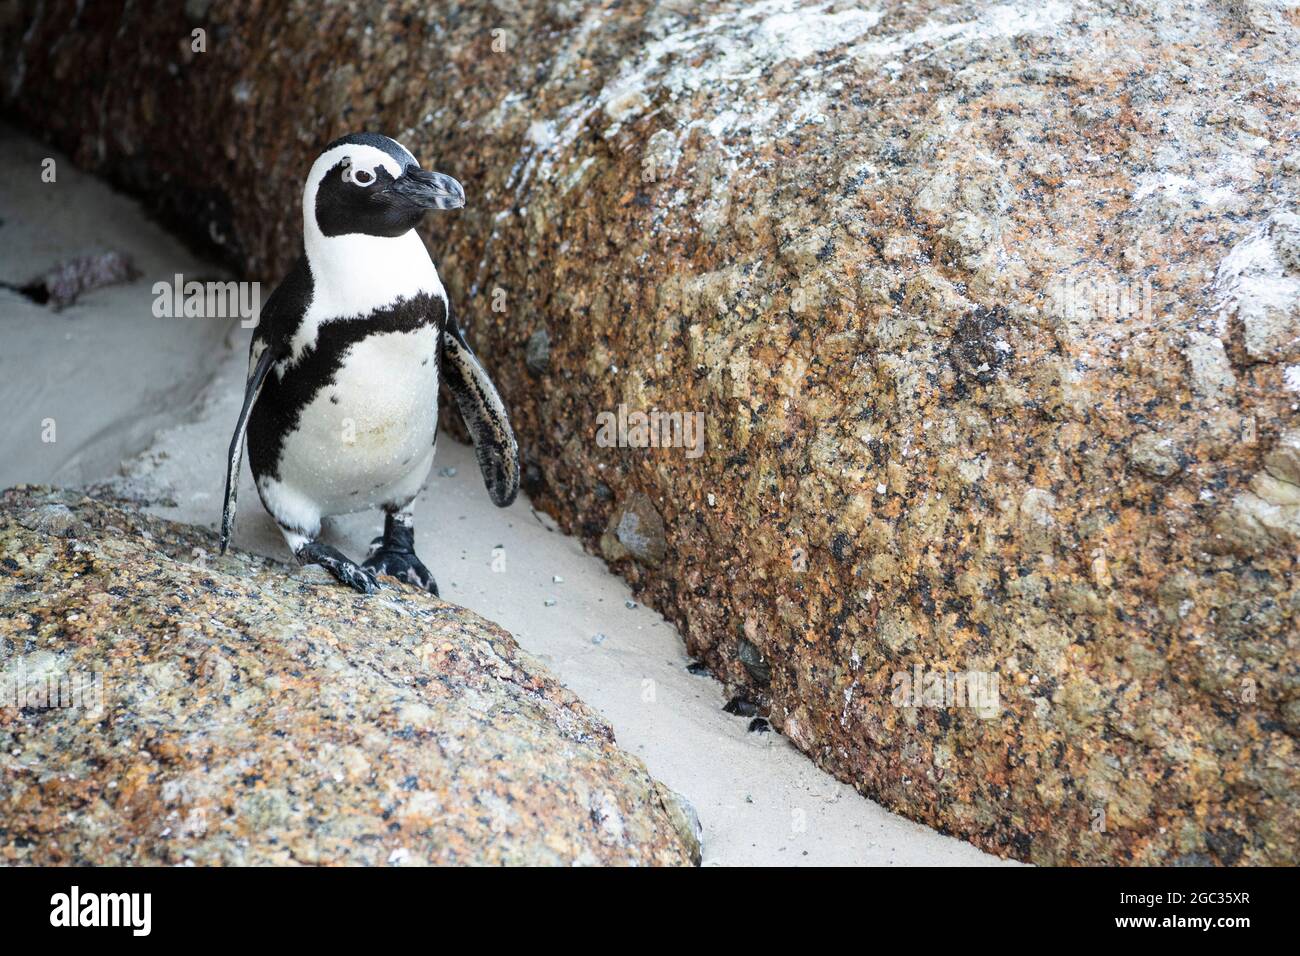 Pingüino africano, Spheniscus demersus, la playa Boulders, Península del Cabo, Sudáfrica Foto de stock